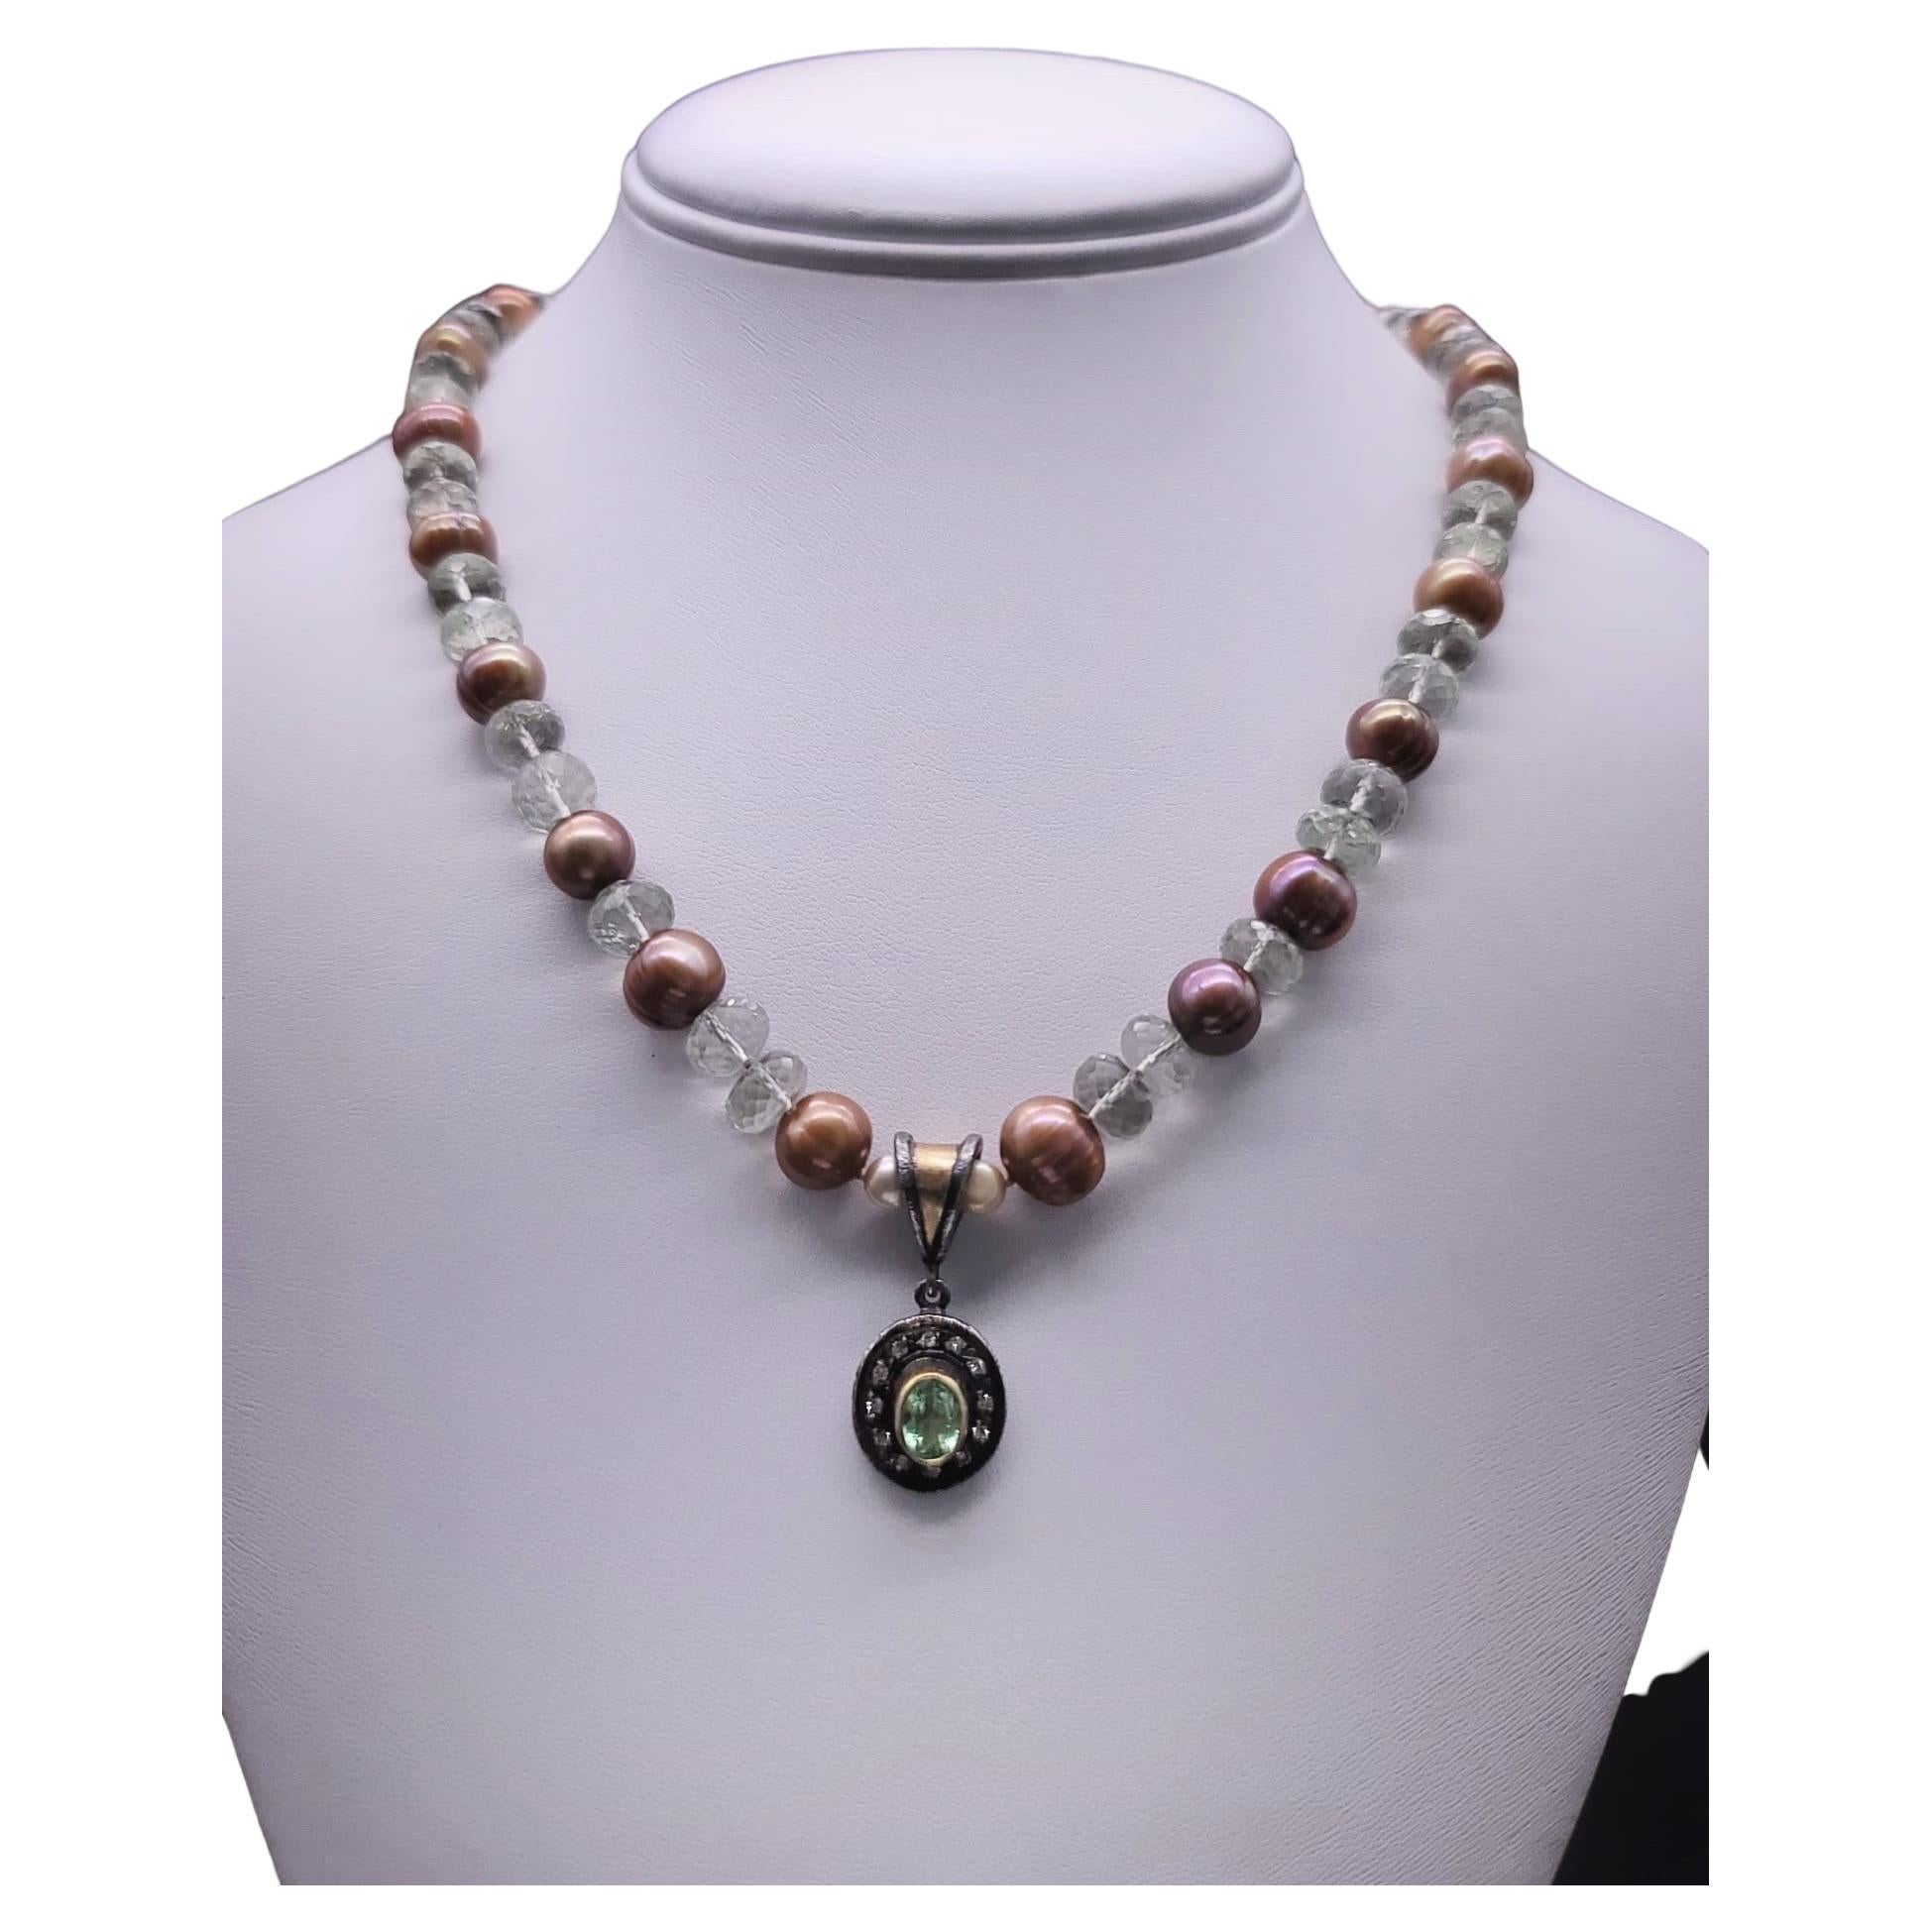 A.Jeschel Lovely Diamond and green Amethyst pendant necklace.